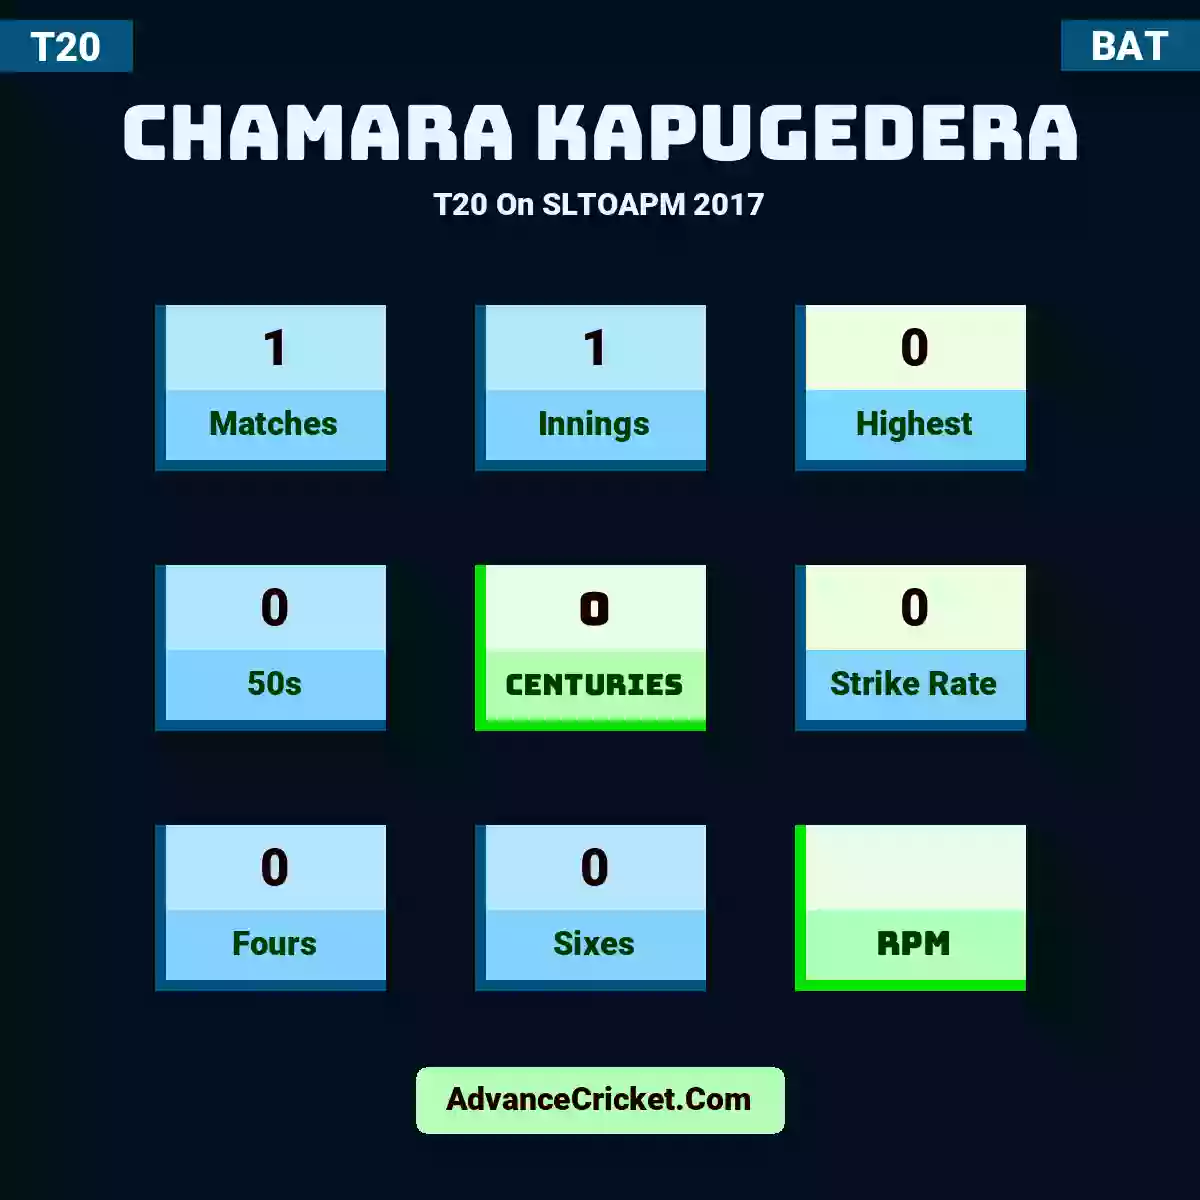 Chamara Kapugedera T20  On SLTOAPM 2017, Chamara Kapugedera played 1 matches, scored 0 runs as highest, 0 half-centuries, and 0 centuries, with a strike rate of 0. C.Kapugedera hit 0 fours and 0 sixes.